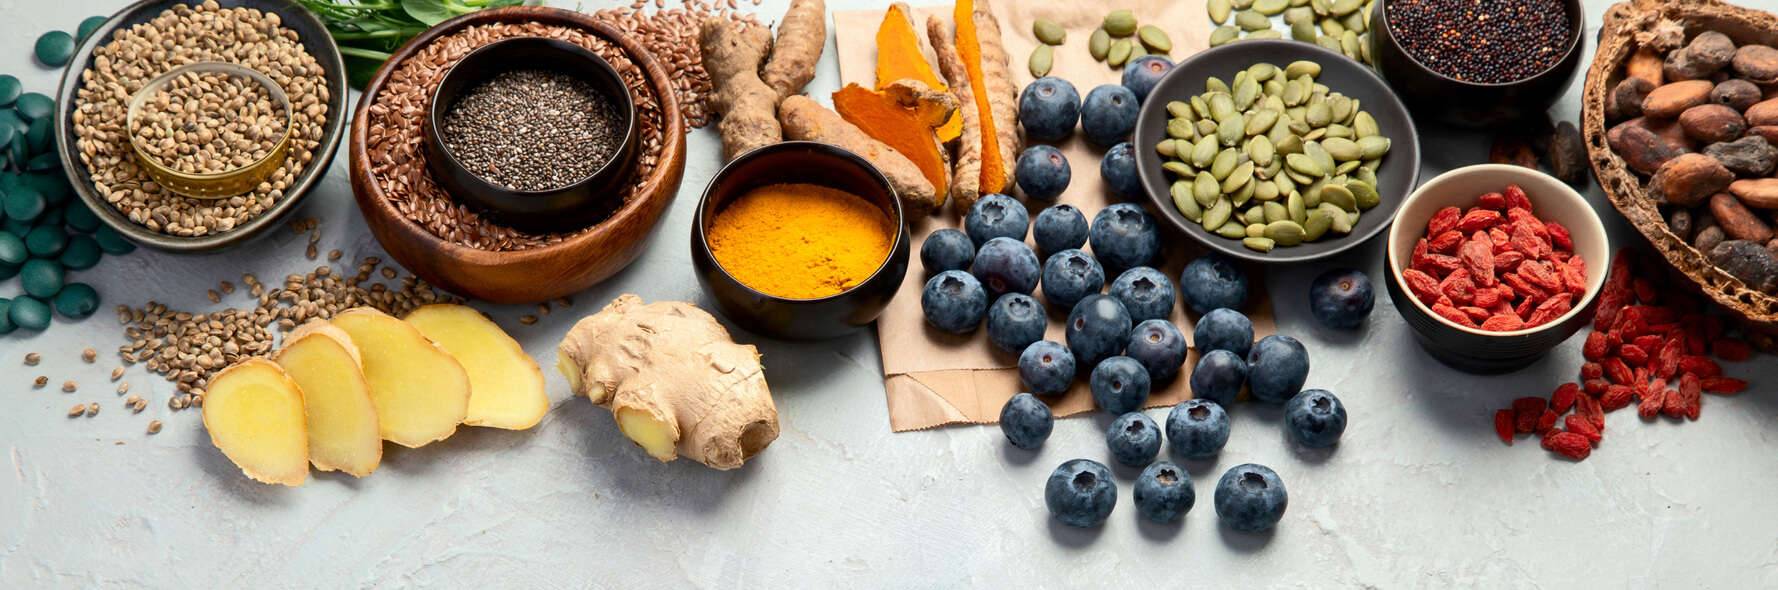 ginger, pumpkin seeds, and blueberries | great diabetics super foods